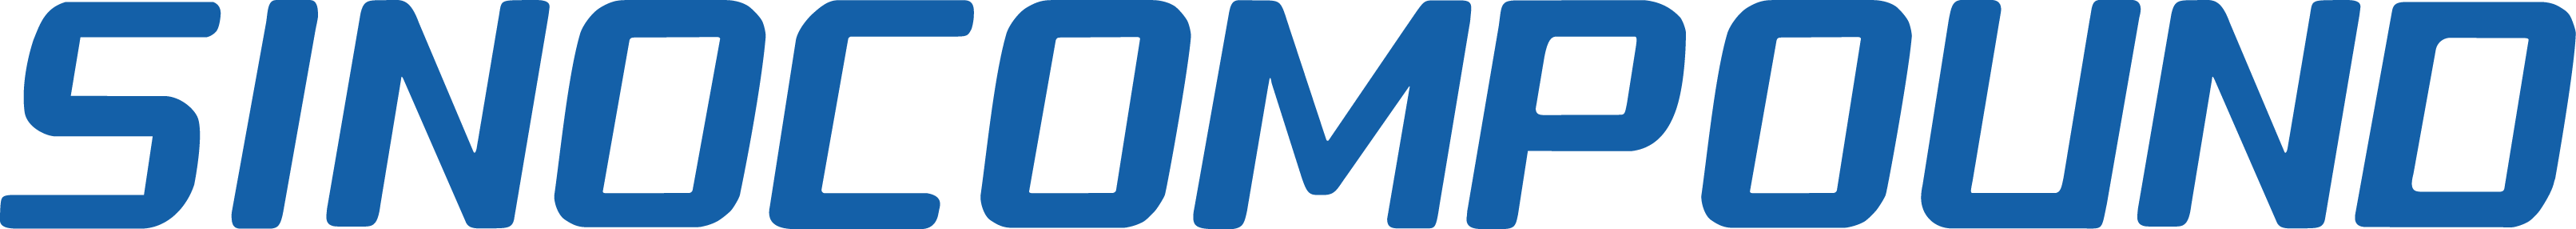 Sinocompound logo